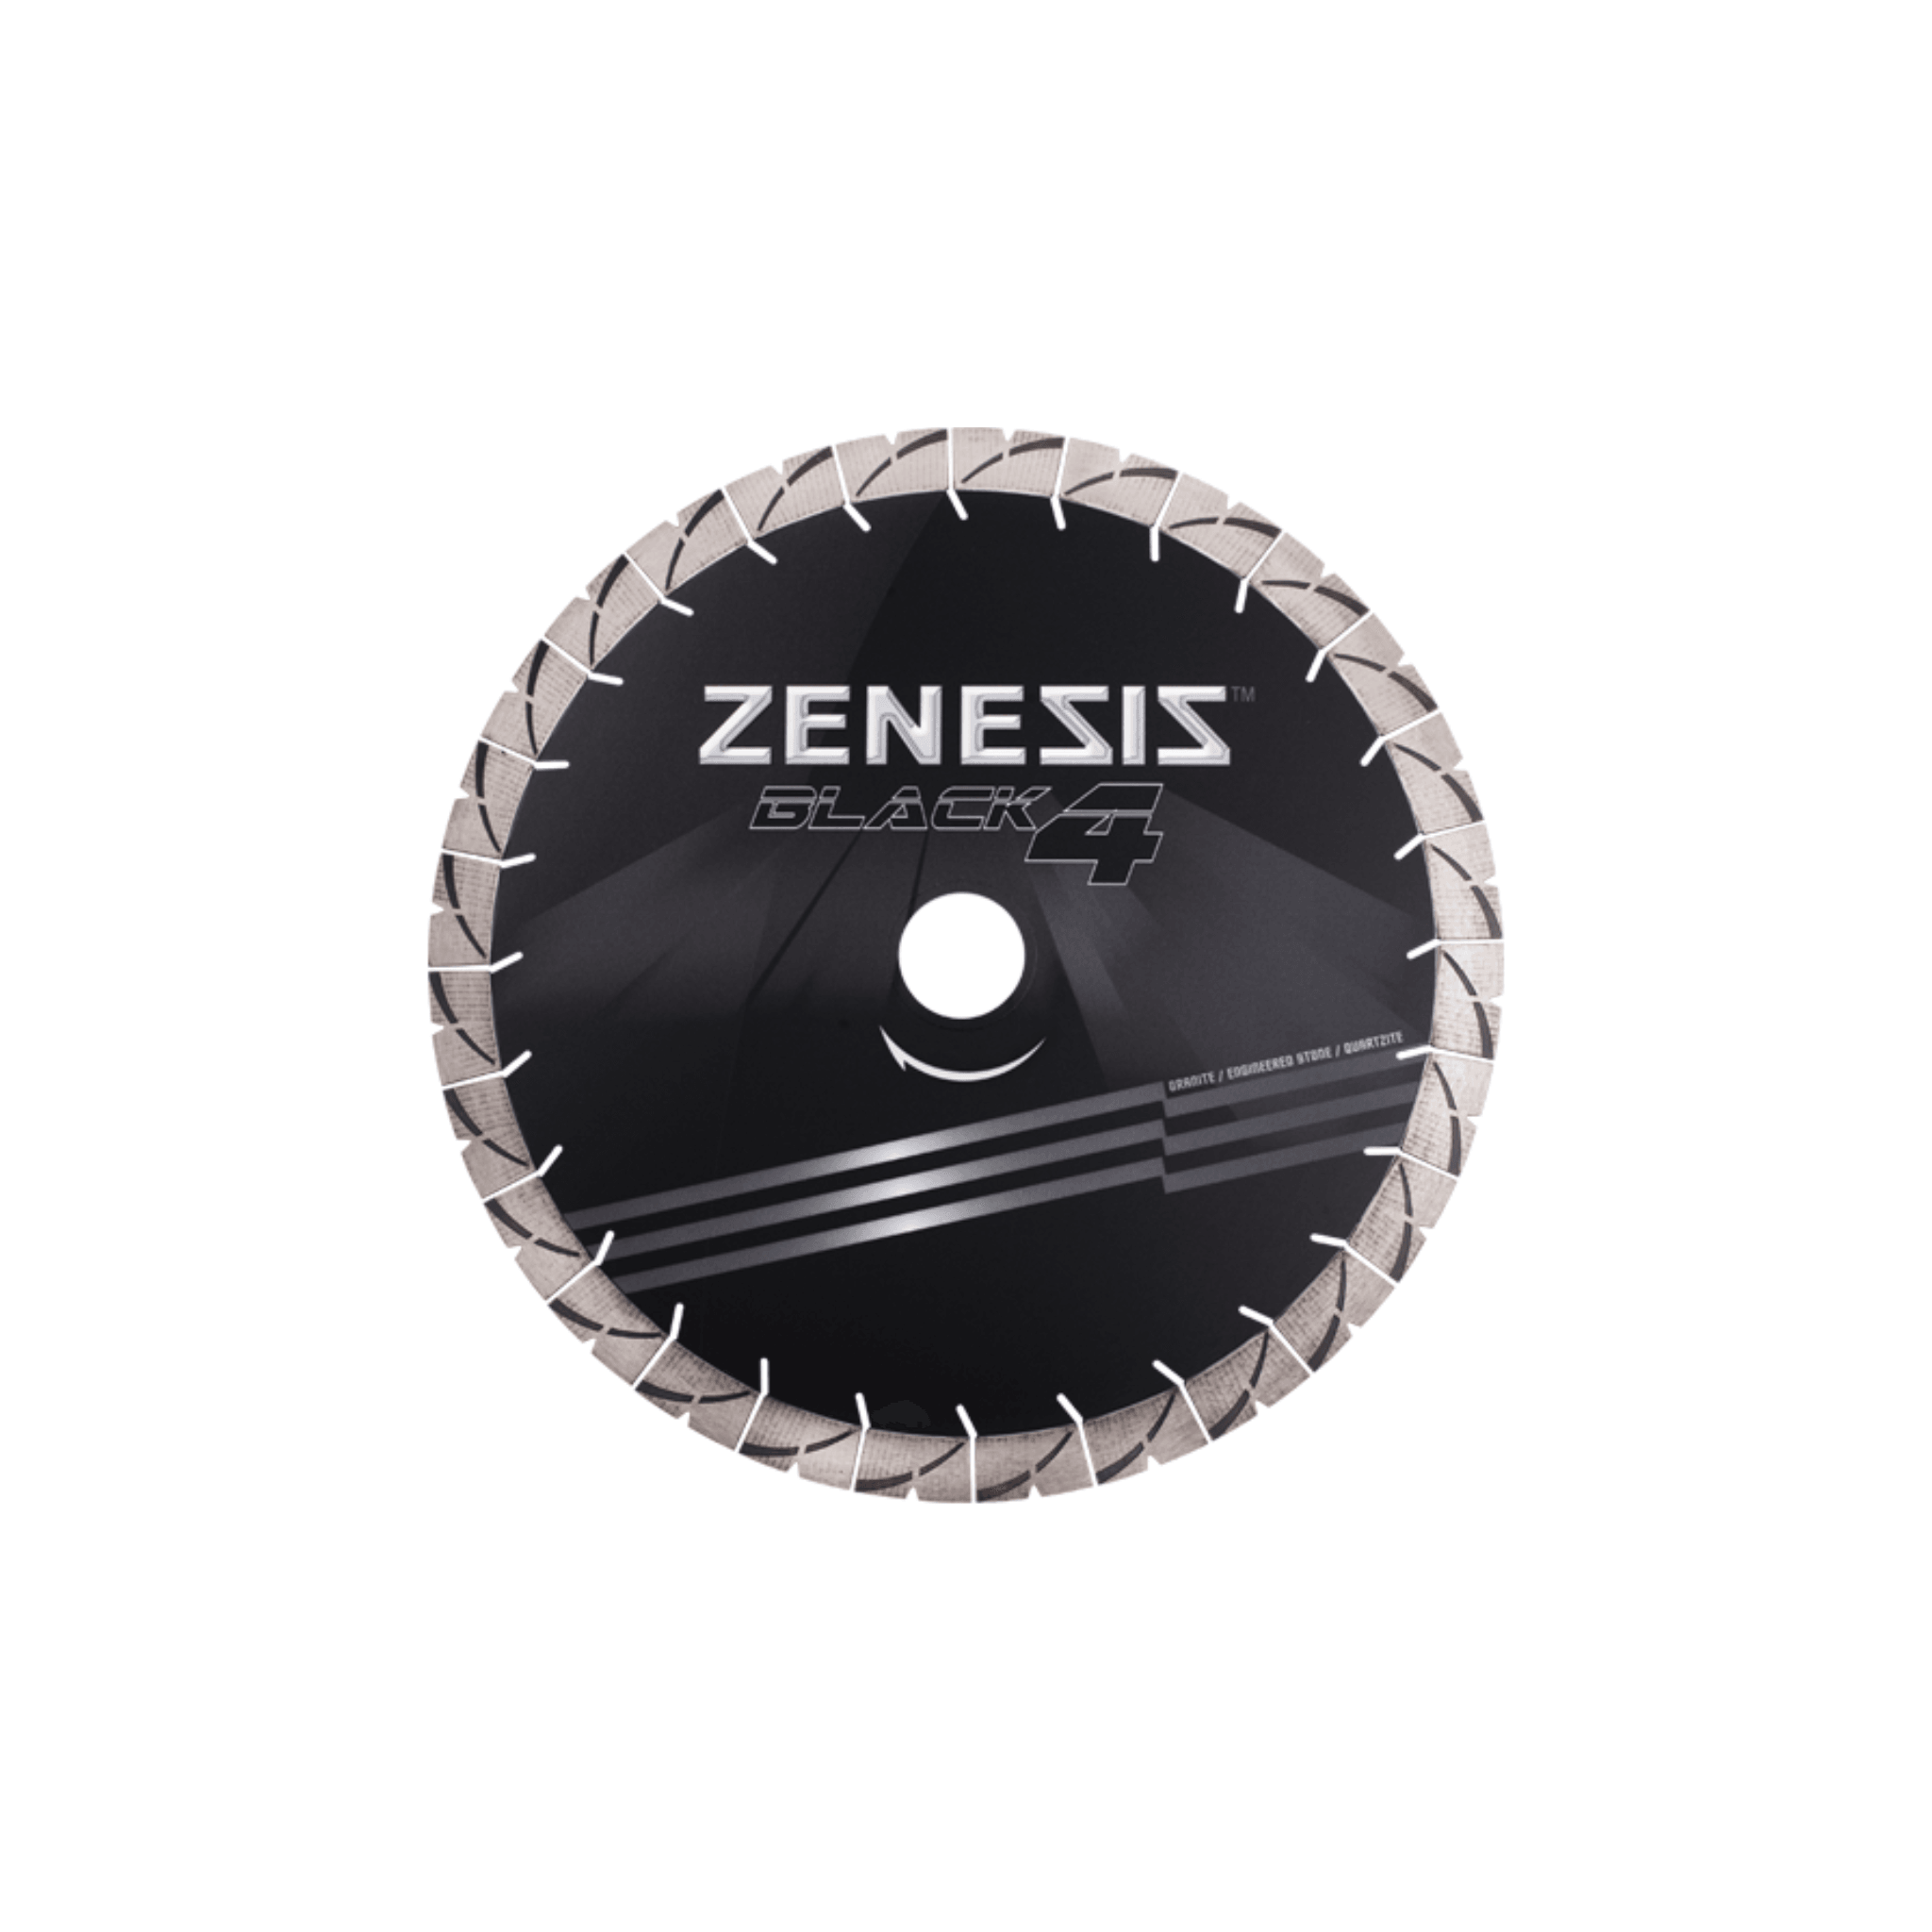 ZENESIS™ Black 4 Blade 12" - Direct Stone Tool Supply, Inc